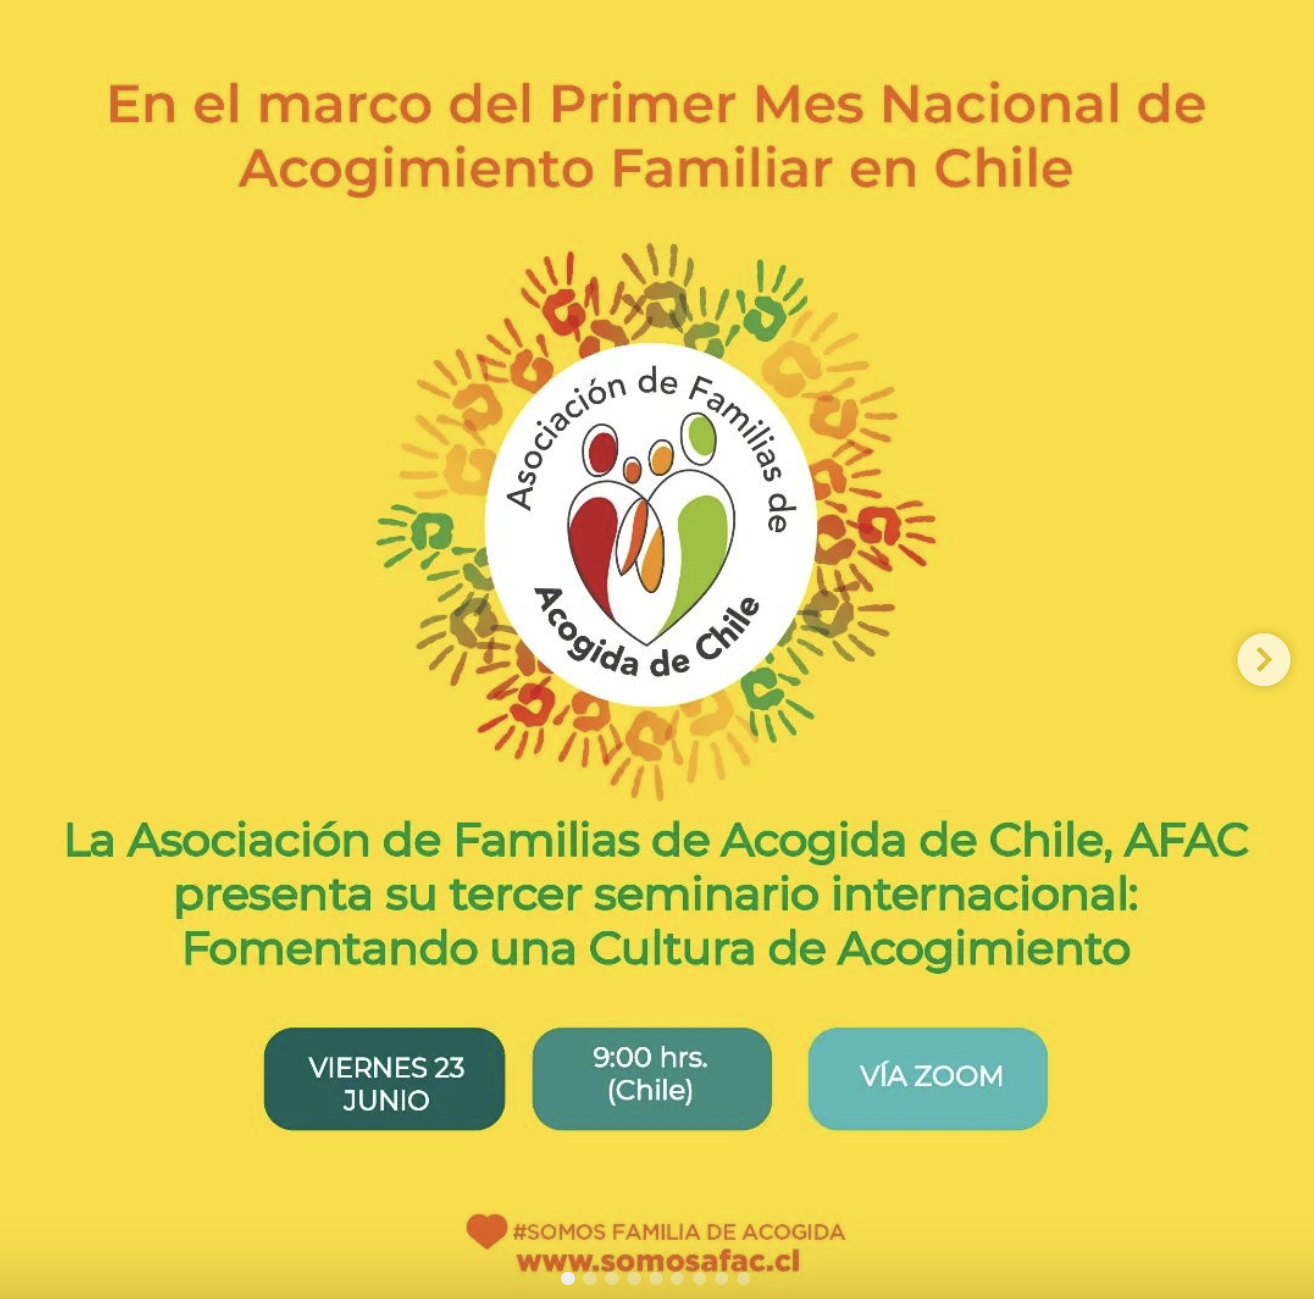 Asociación de Familias de Acogida de Chile, AFAC